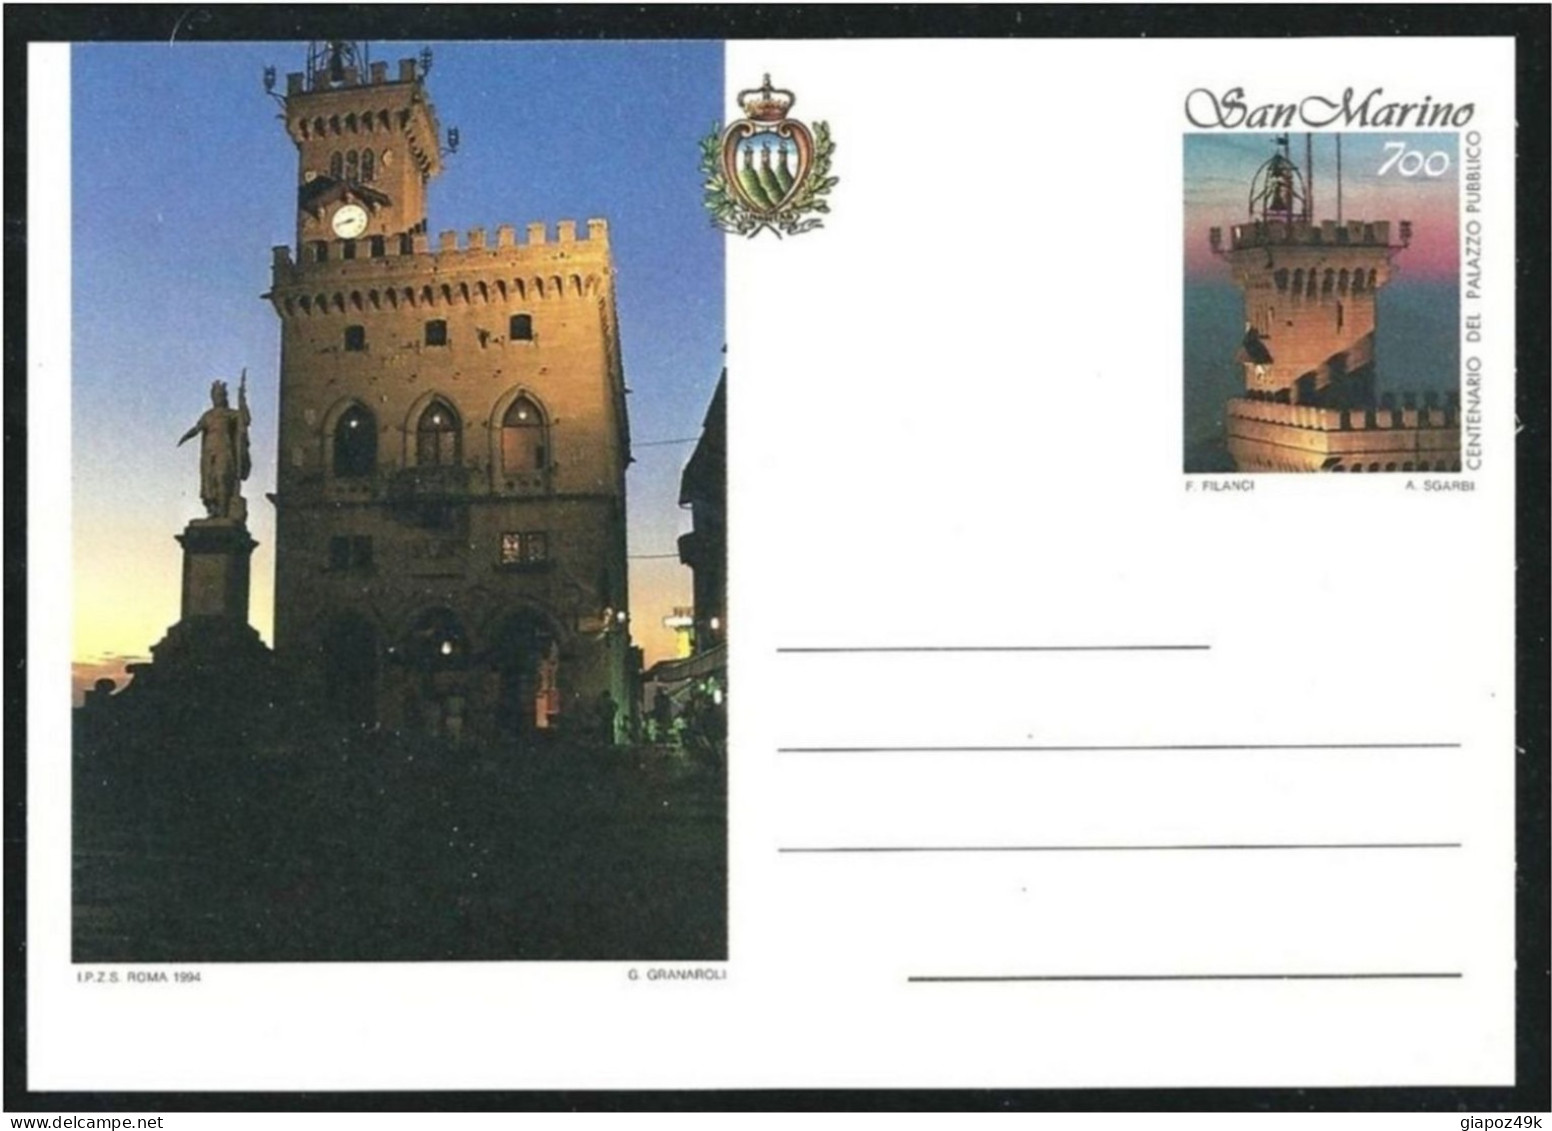 ● San MARINO 1994 ֍ Palazzo Consiglio ● 2 Cartoline Postali ● Nuovi ** ● Serie Completa ● Cat. ? € ● - Entiers Postaux